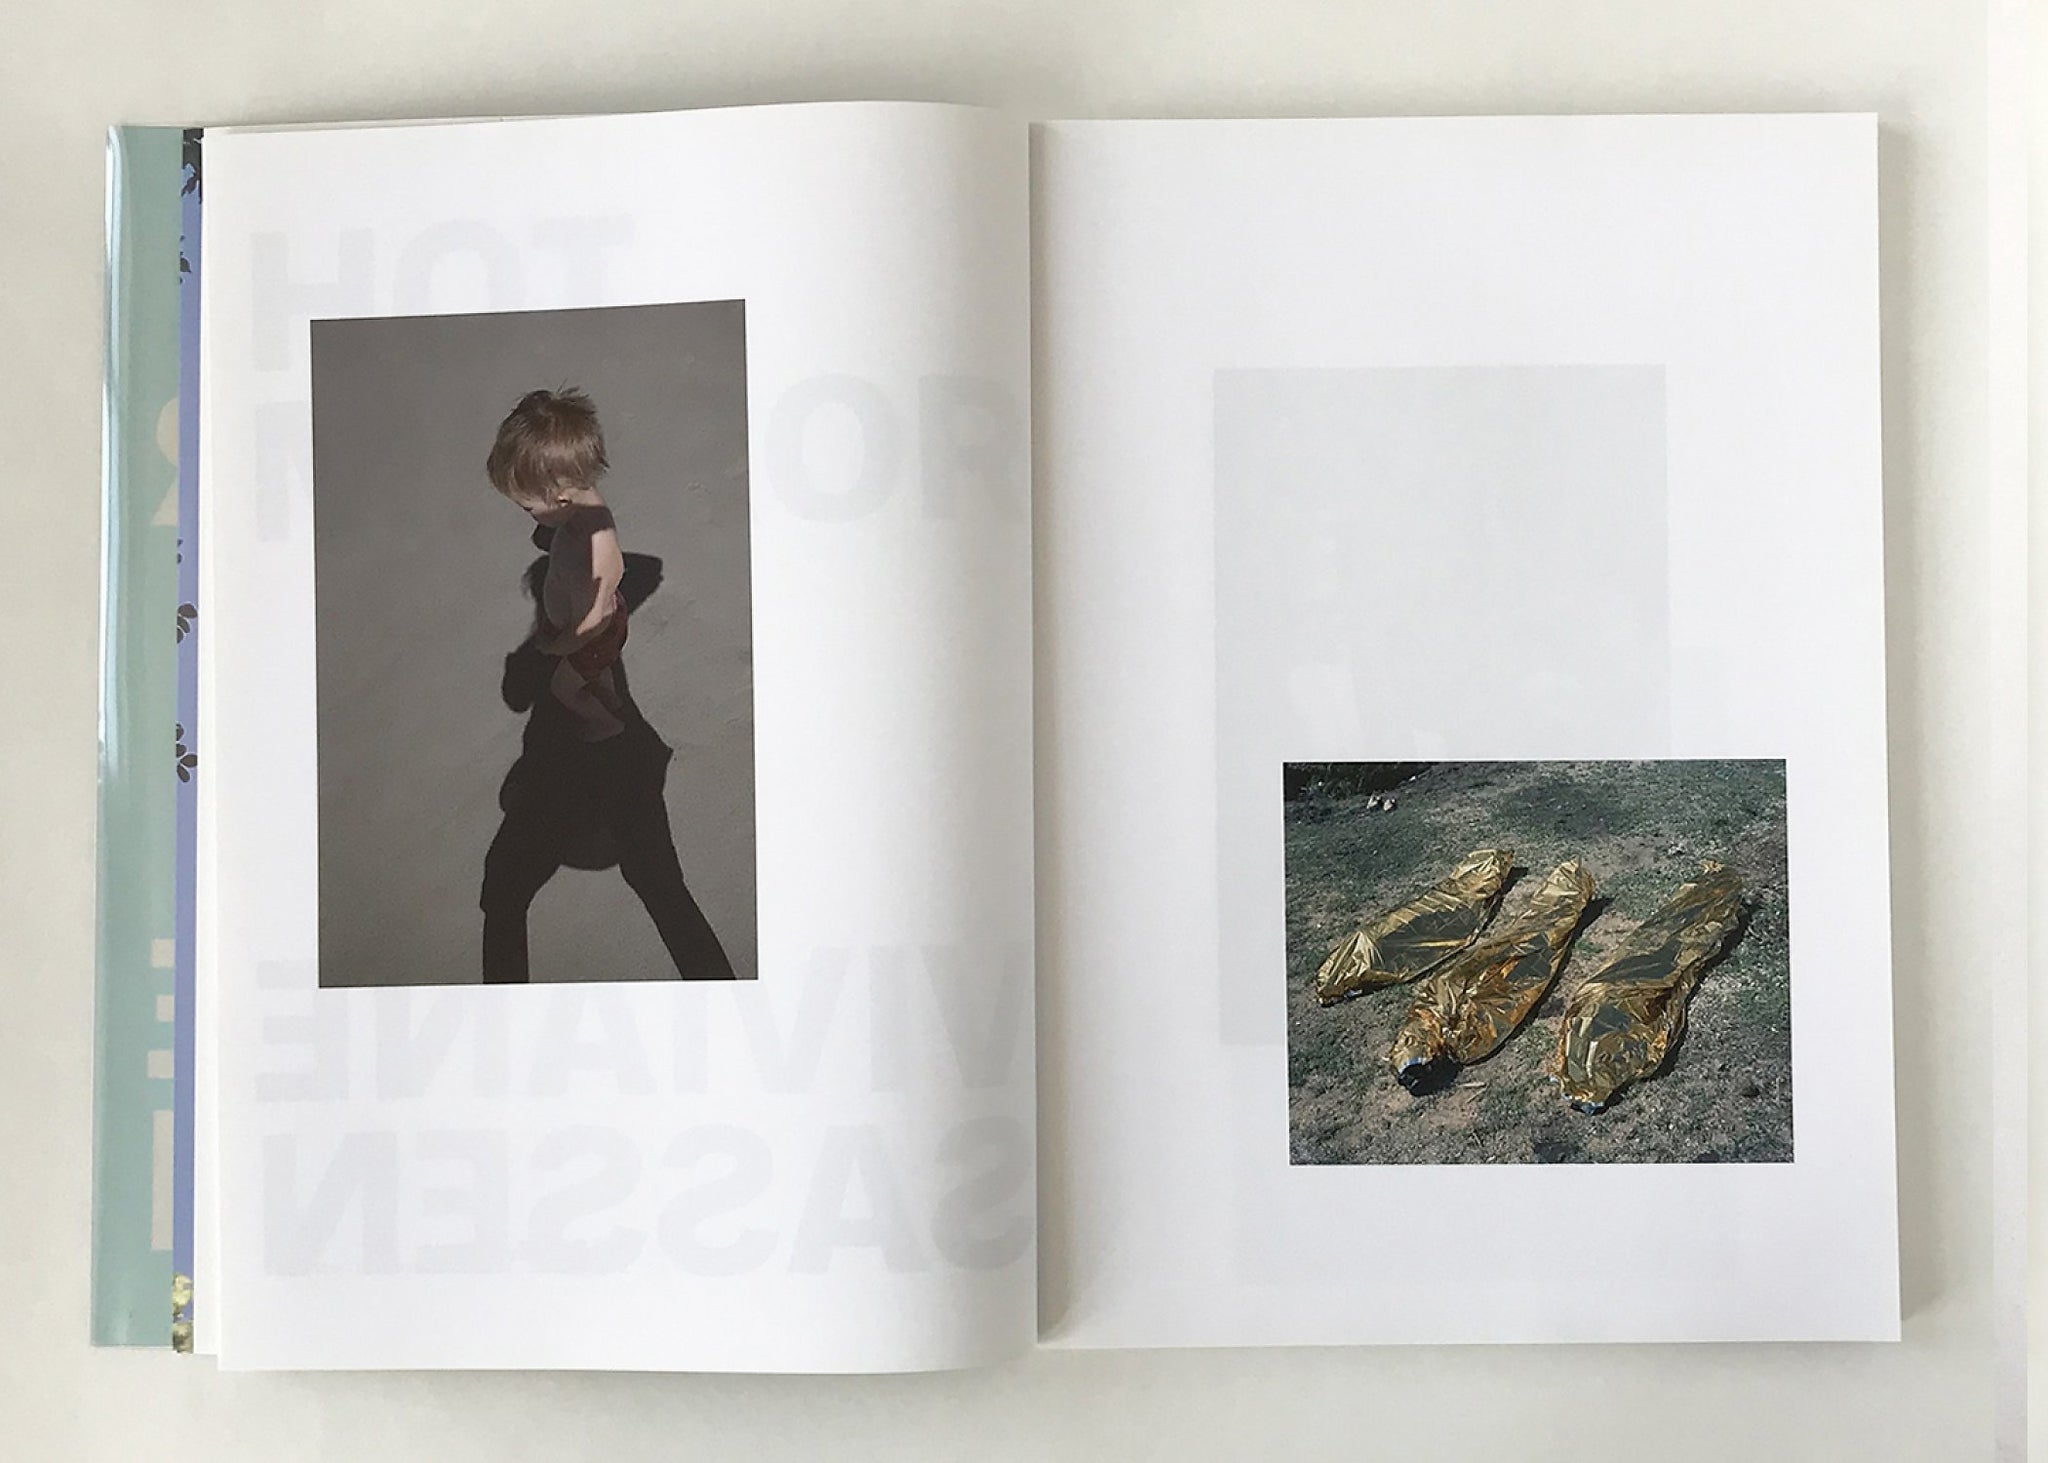 Viviane Sassen: Hot Mirror. Prestel Publishing (Hardcover)